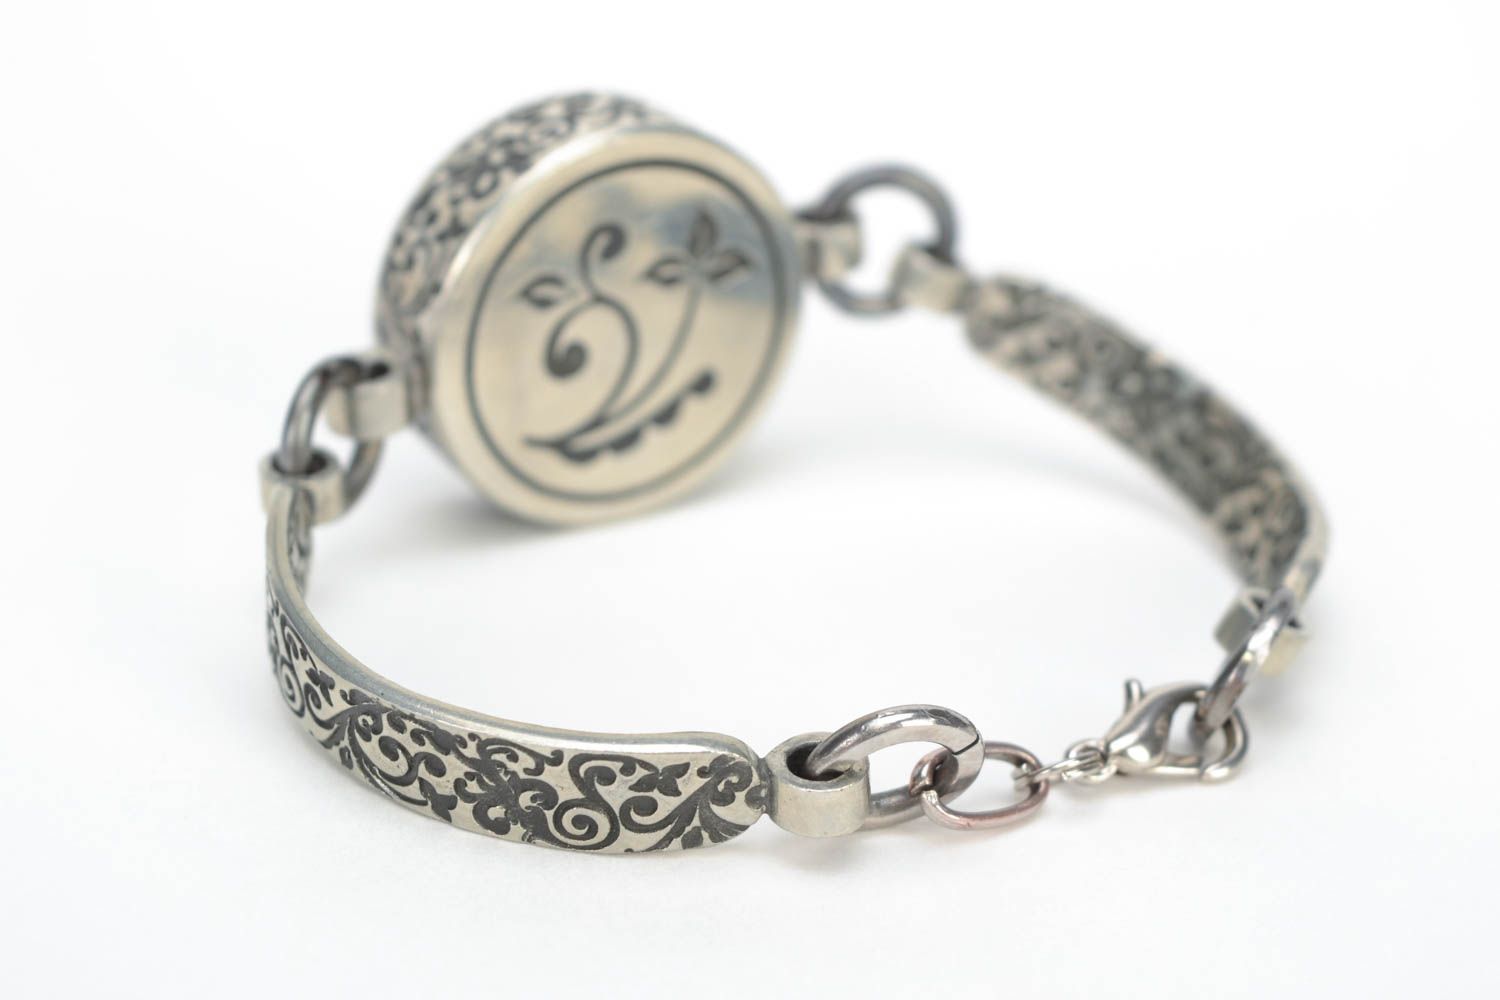 Accessory for jewelry handmade beautiful metal bracelet how to make jewelry photo 3